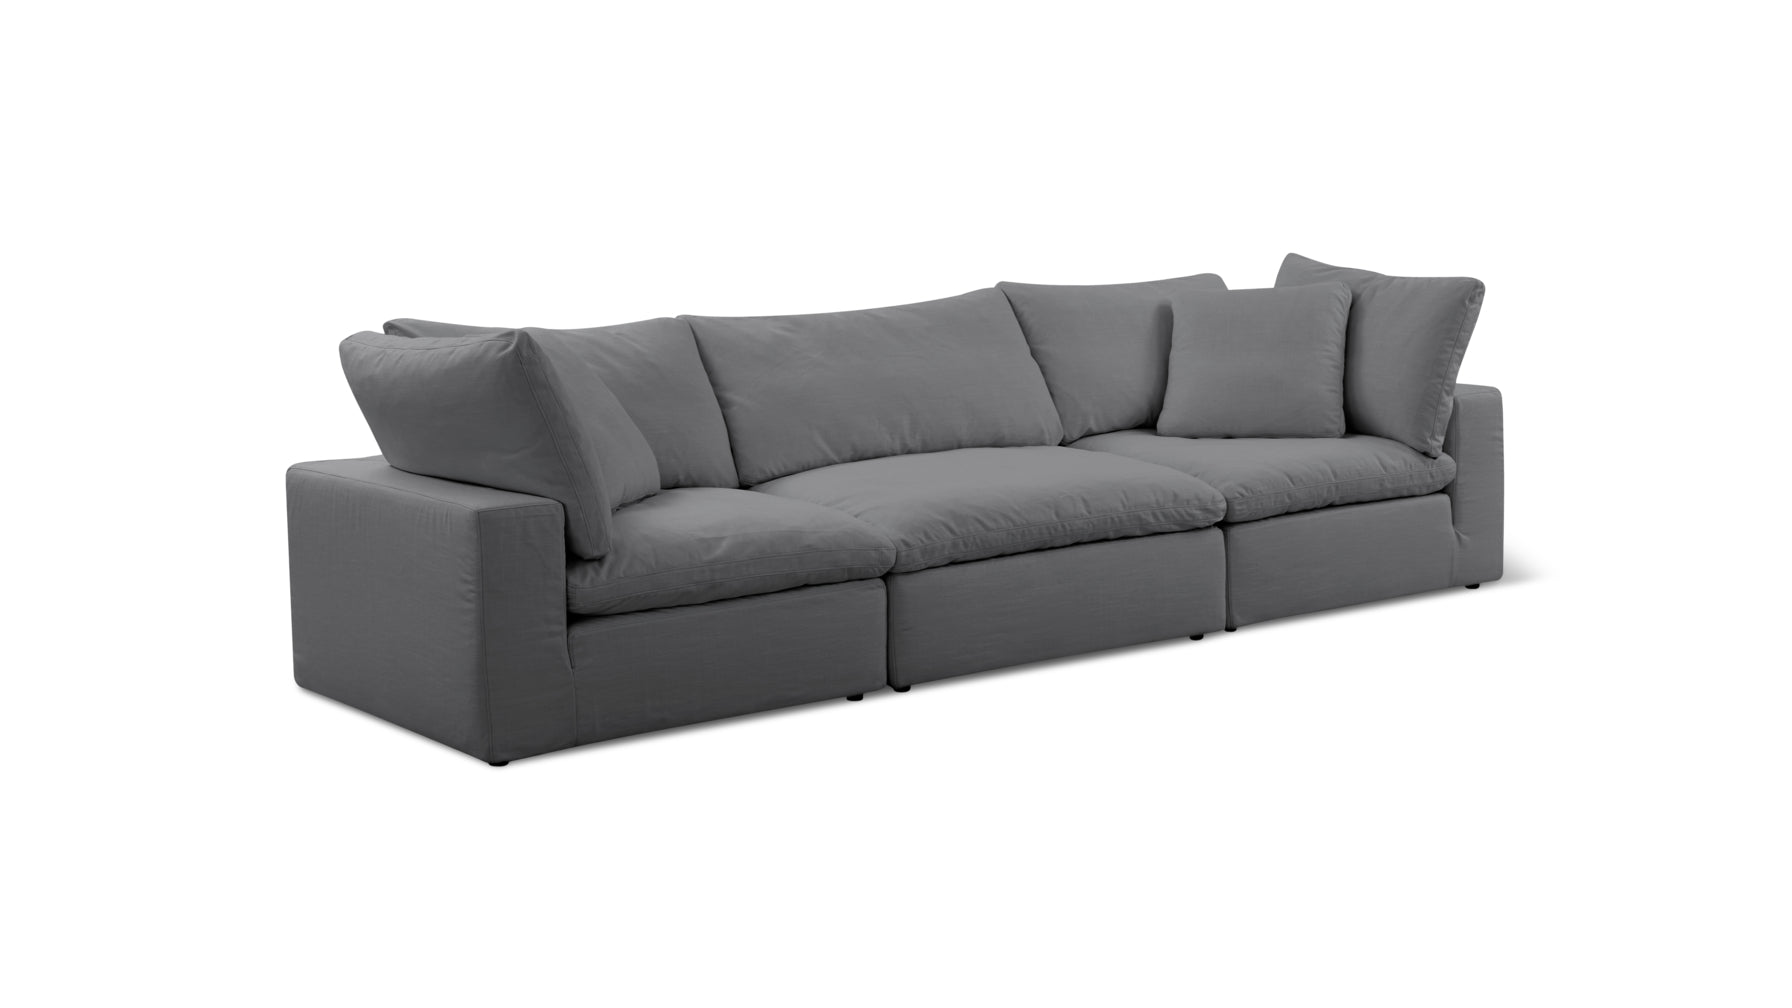 Movie Night™ 3-Piece Modular Sofa, Large, Gentle Rain - Image 6